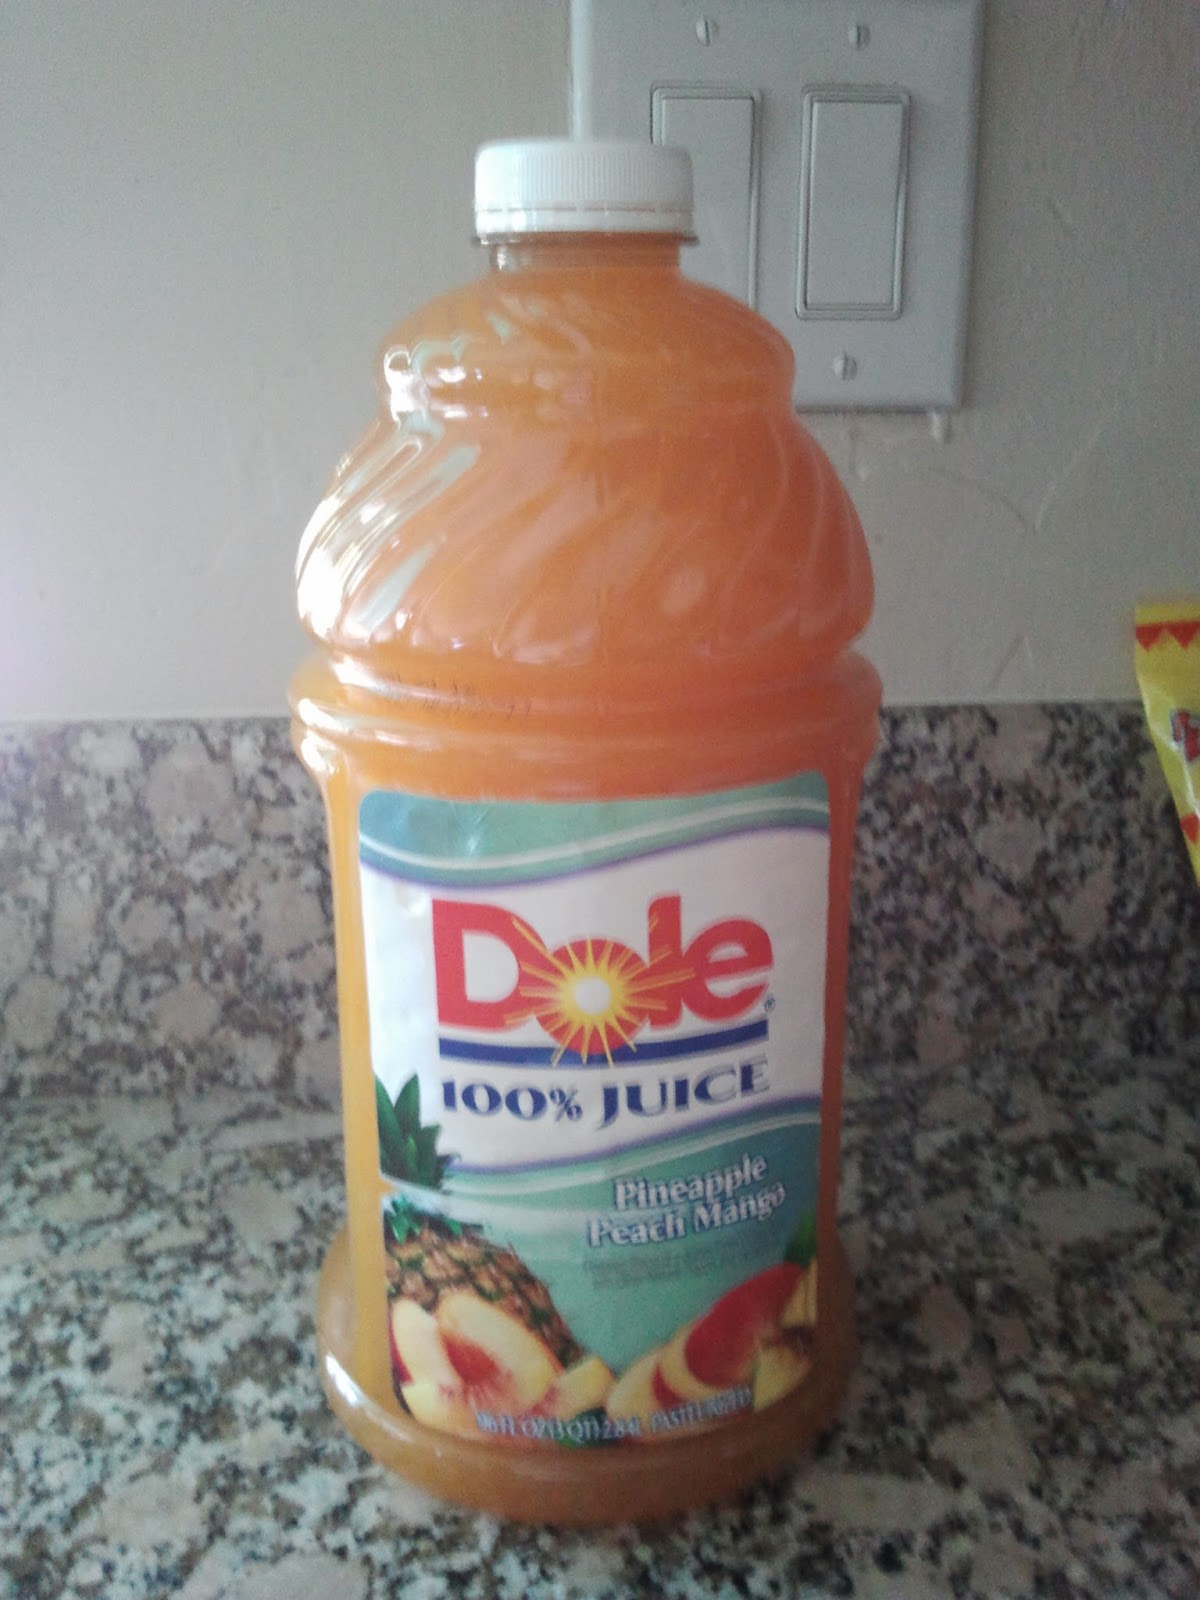 A BIG (96 oz) bottle of Dole